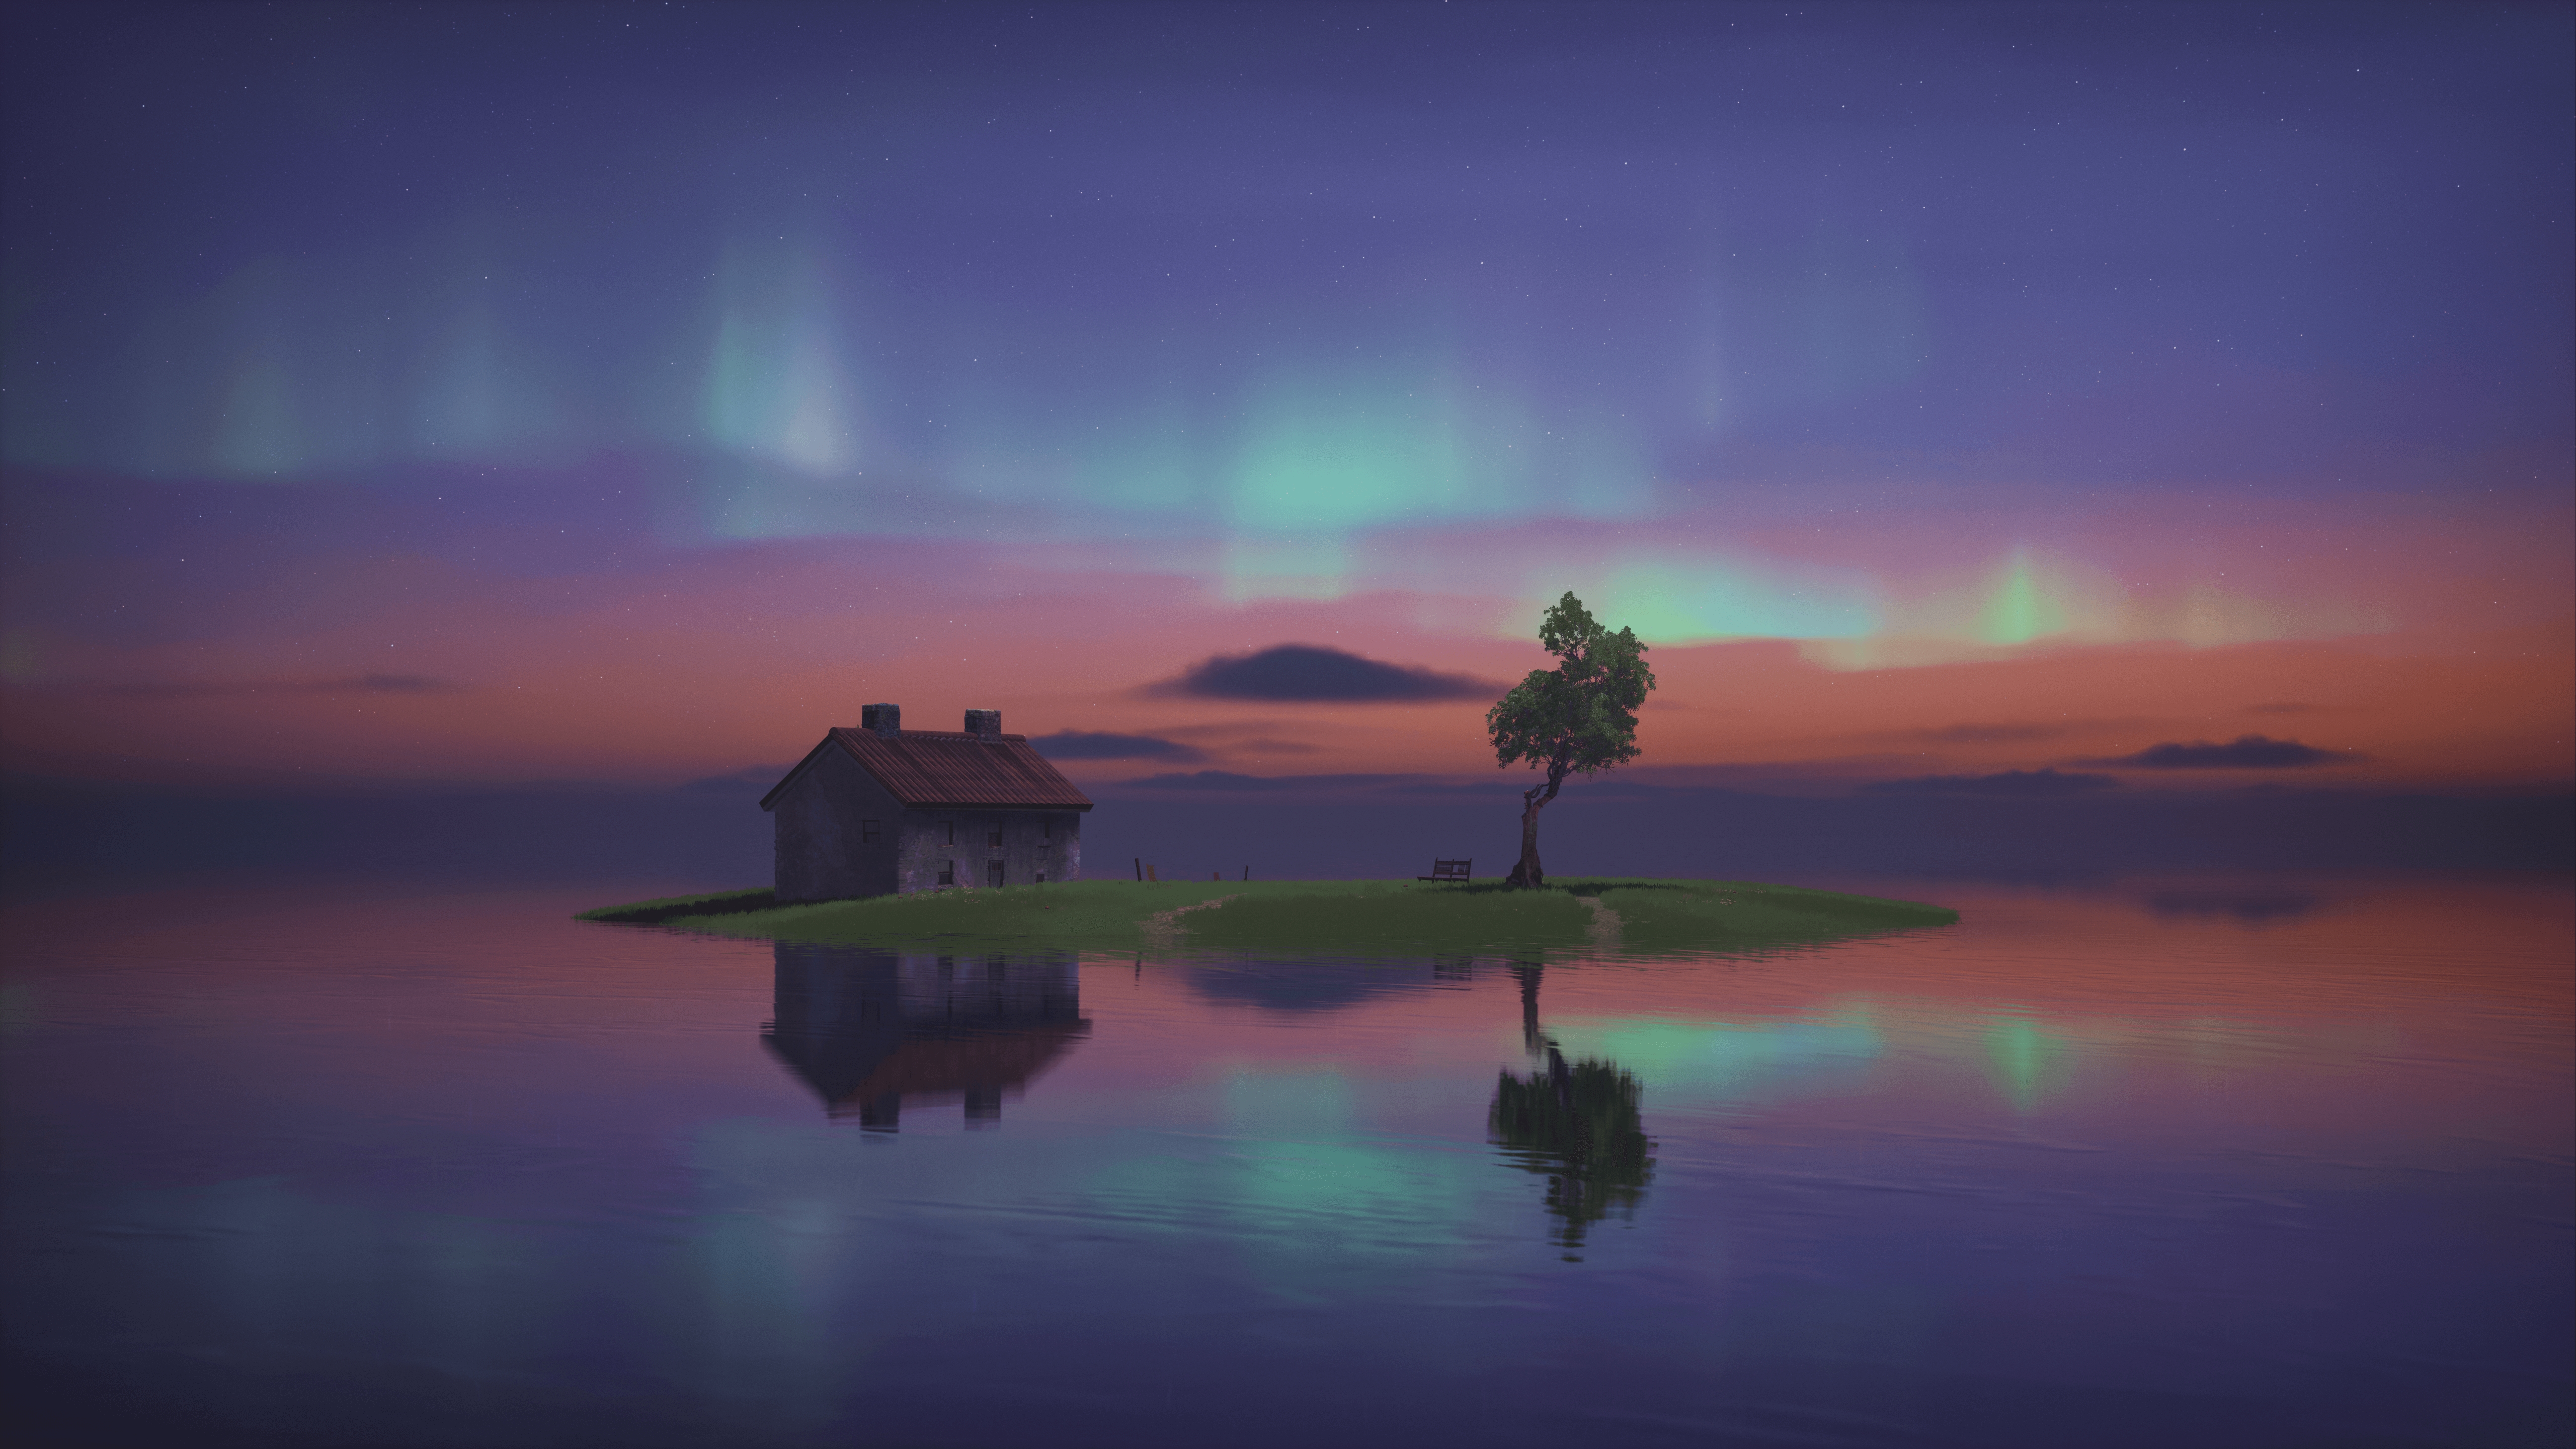 HD wallpaper, Sunset, Twilight, Lone Tree, Evening Sky, House, Lake, 5K, Body Of Water, Aurora Borealis, Island, Reflections